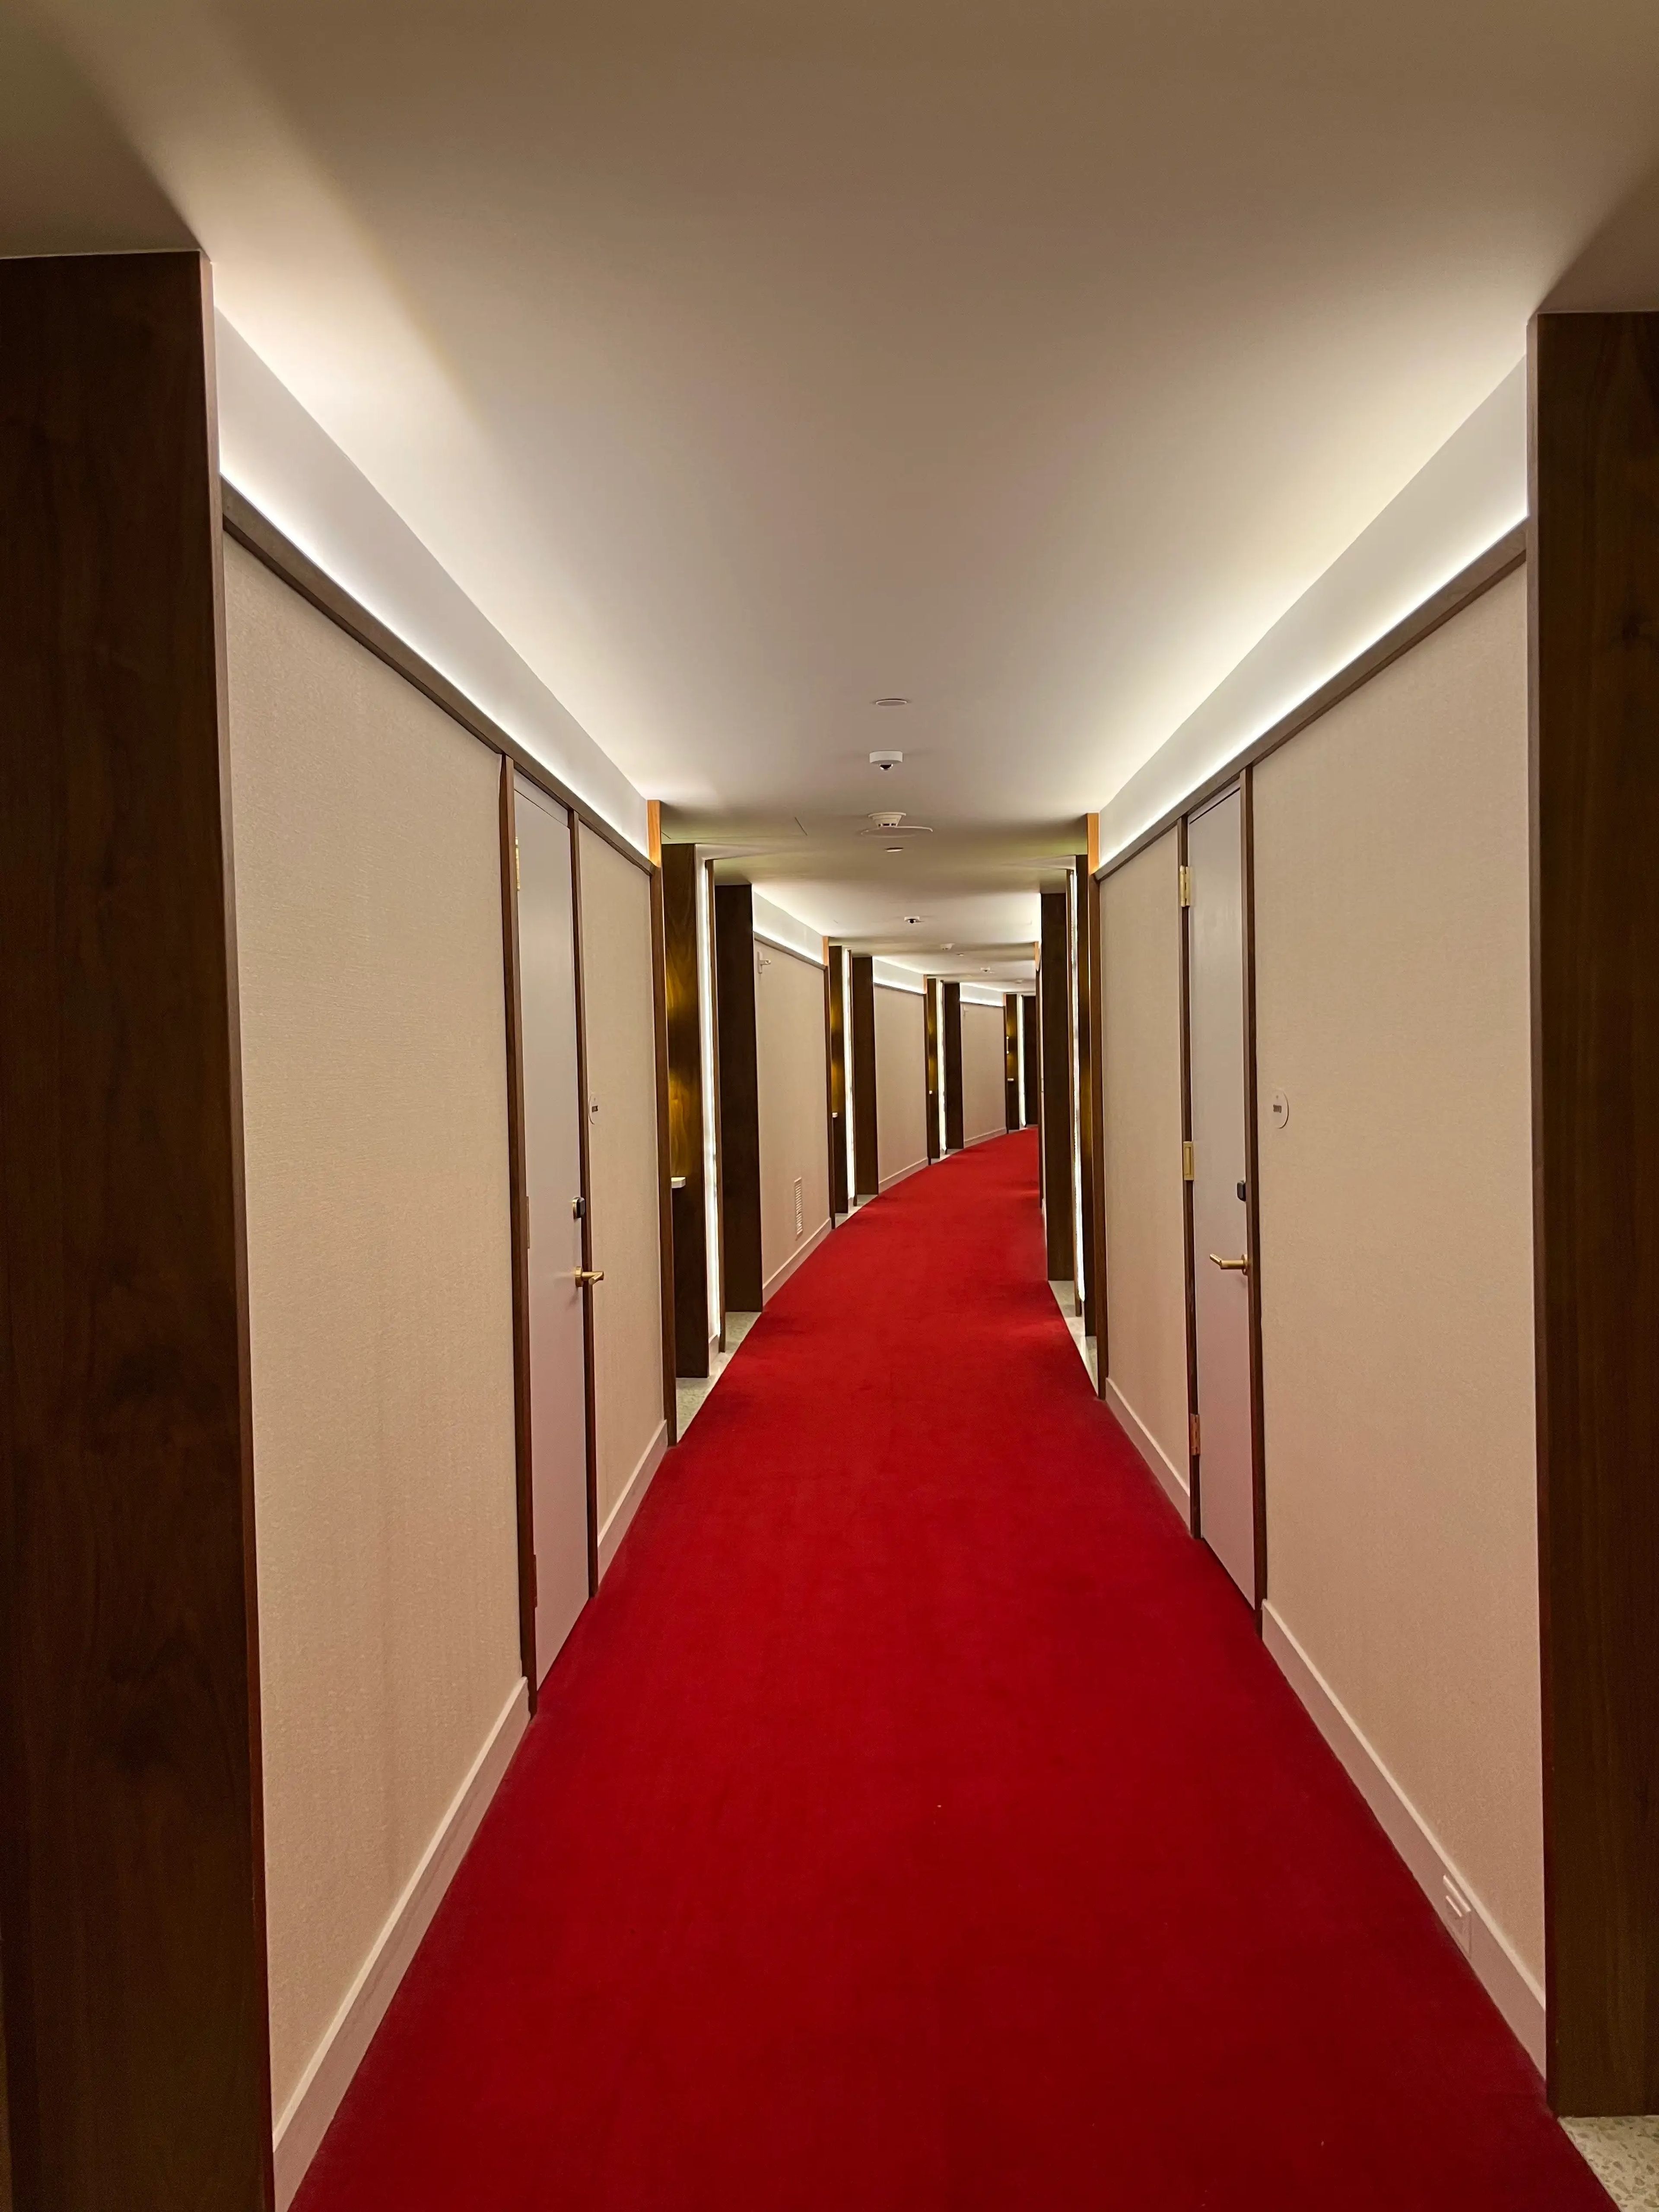 TWA HOTEL hallway with red carpet